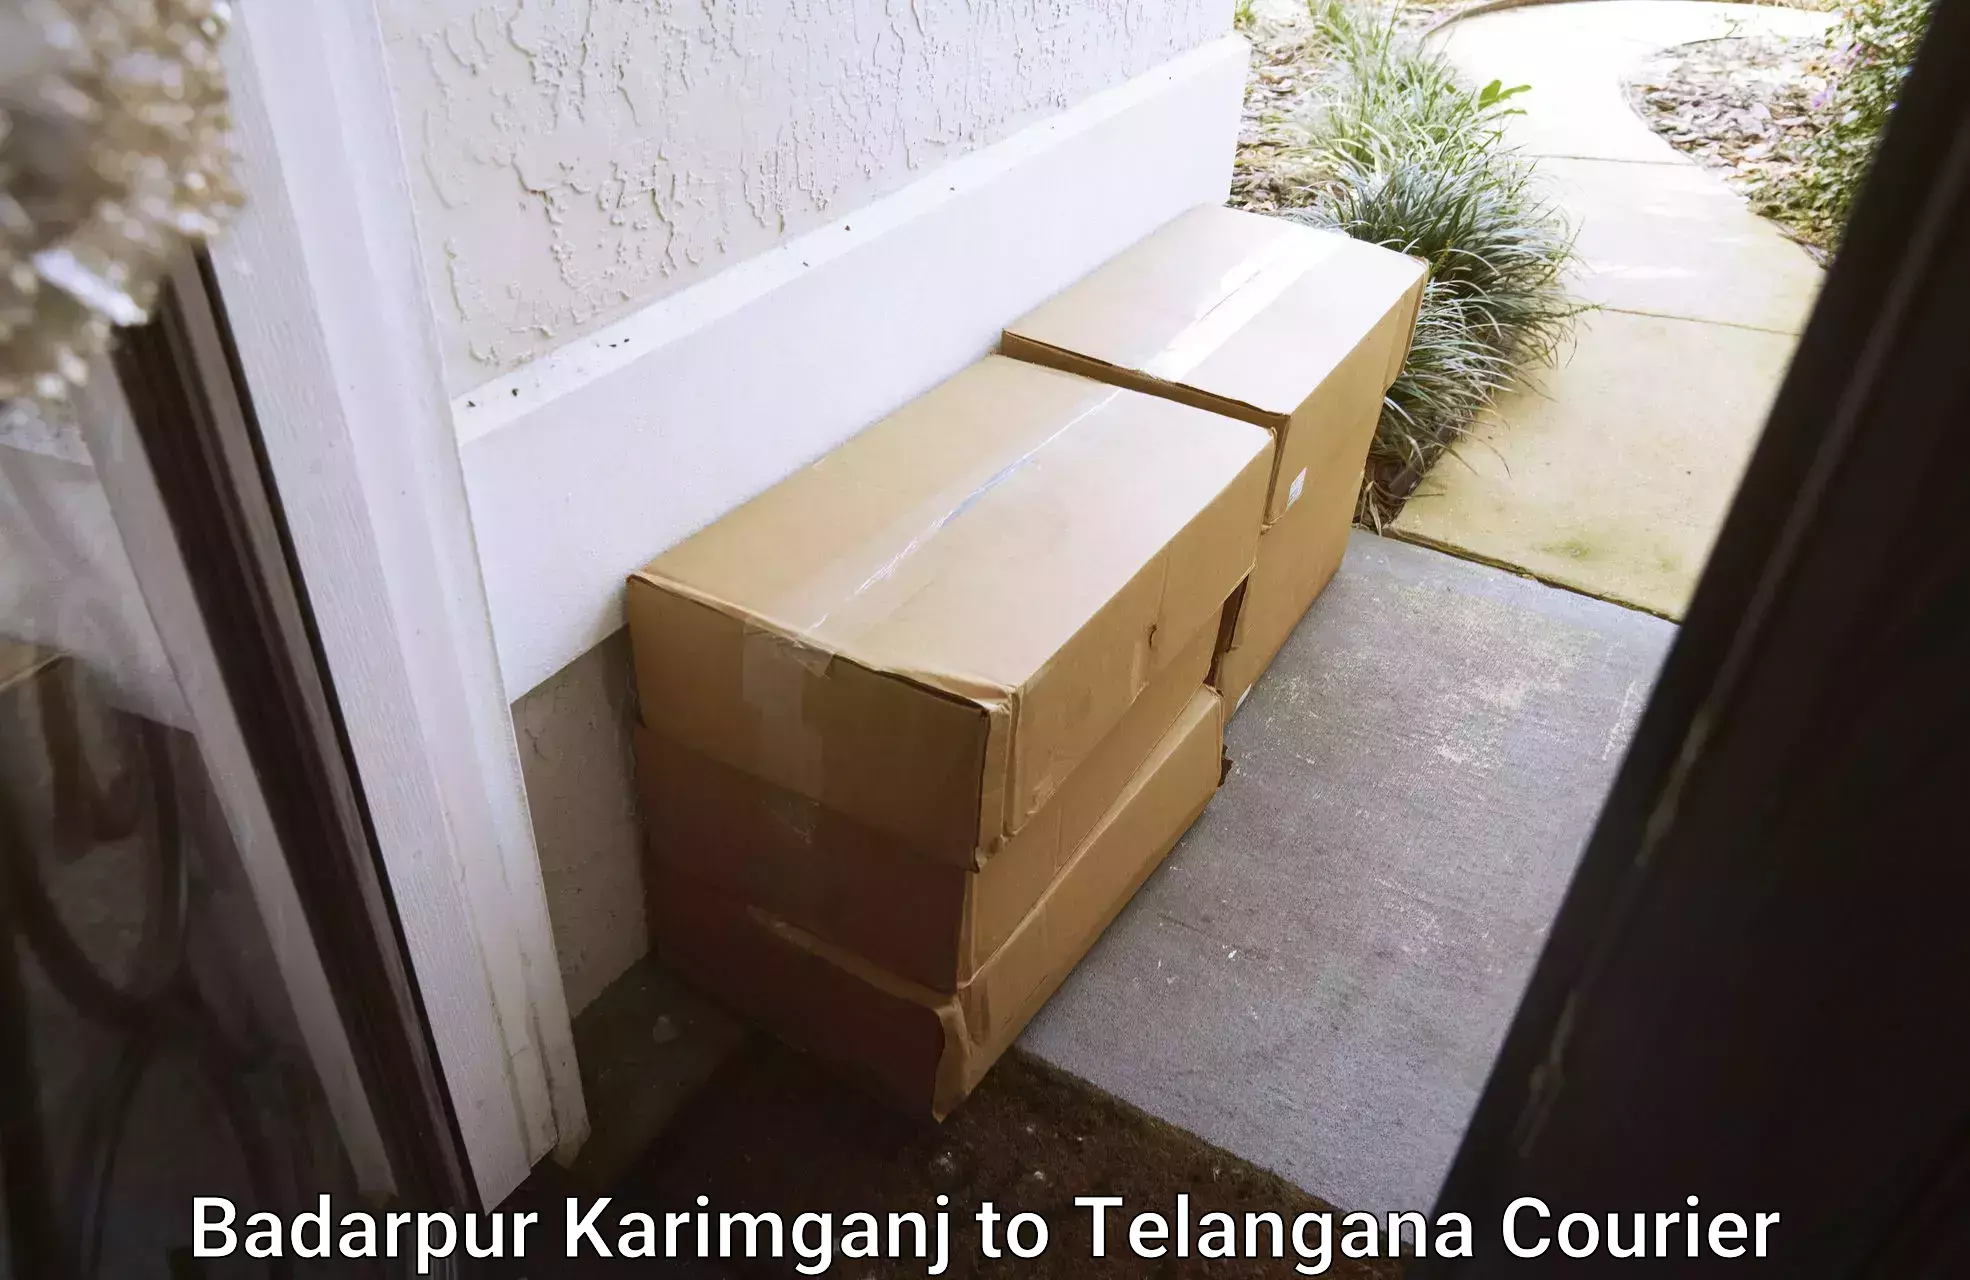 Premium courier solutions Badarpur Karimganj to Bhongir